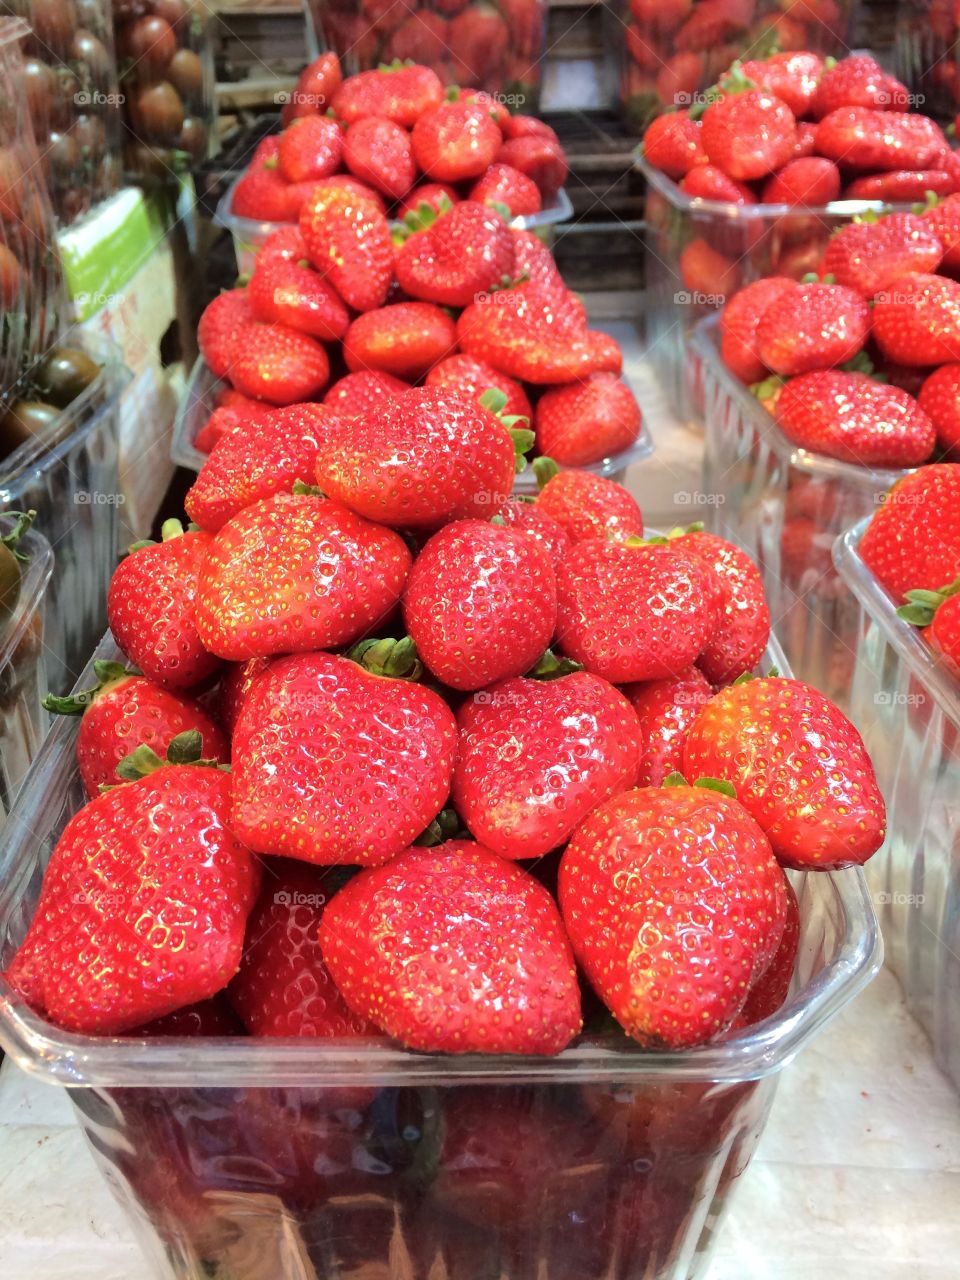 Some strawberries at Mahane Yehuda Market in Jerusalem 